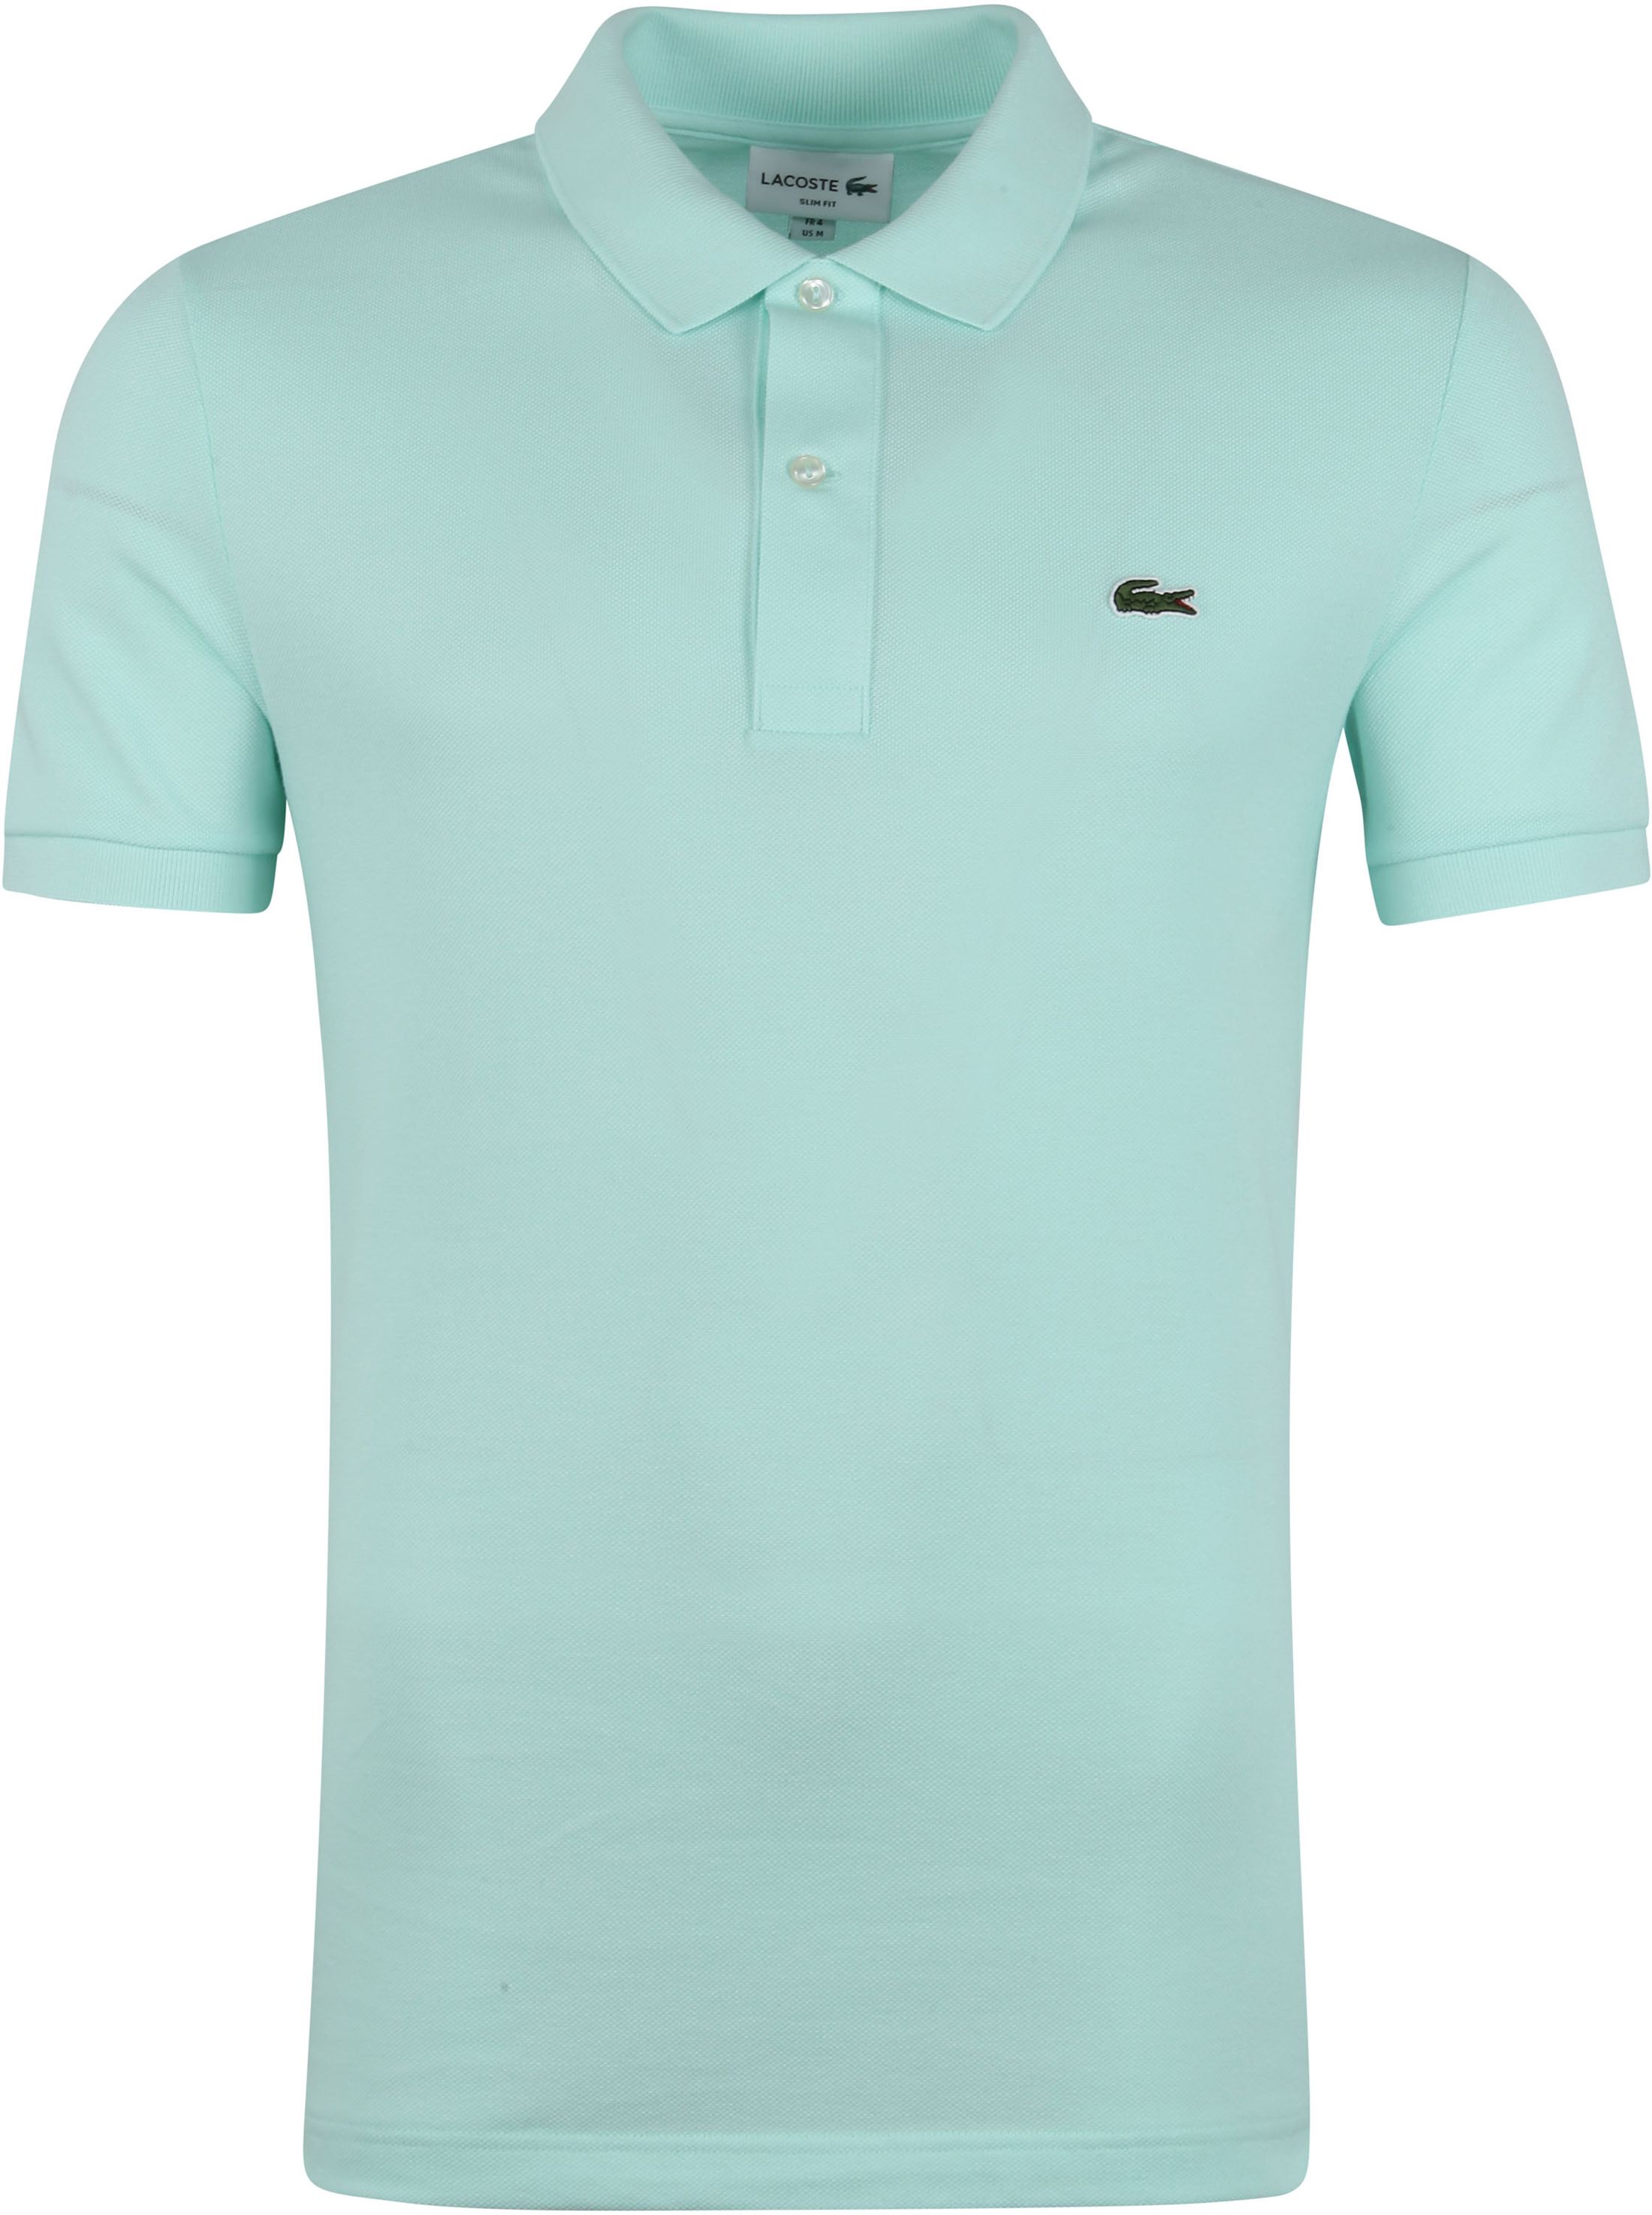 Lacoste Polo Shirt Pique Turquoise Blue size 3XL